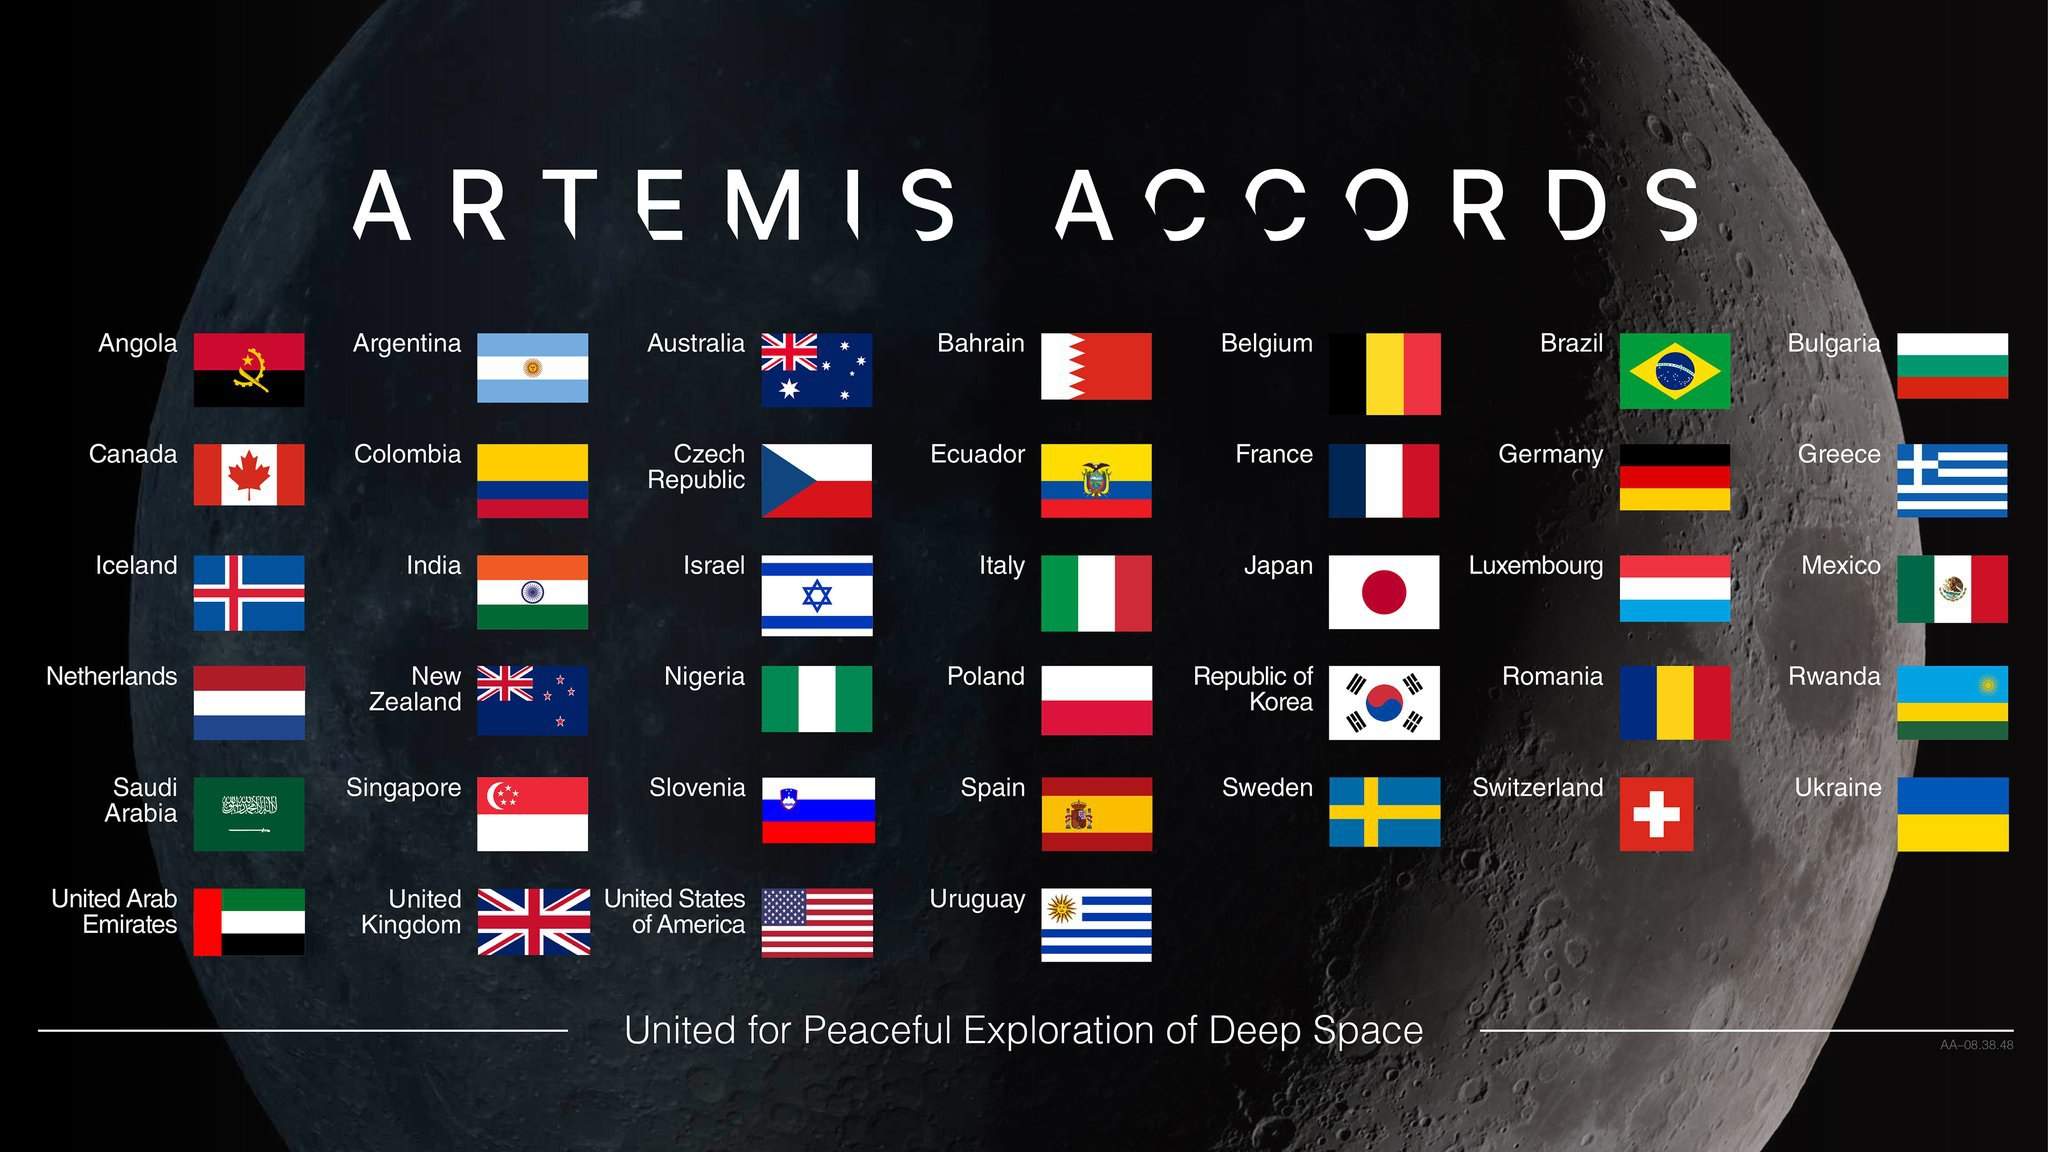 Slovenia signed the Artemis Accords